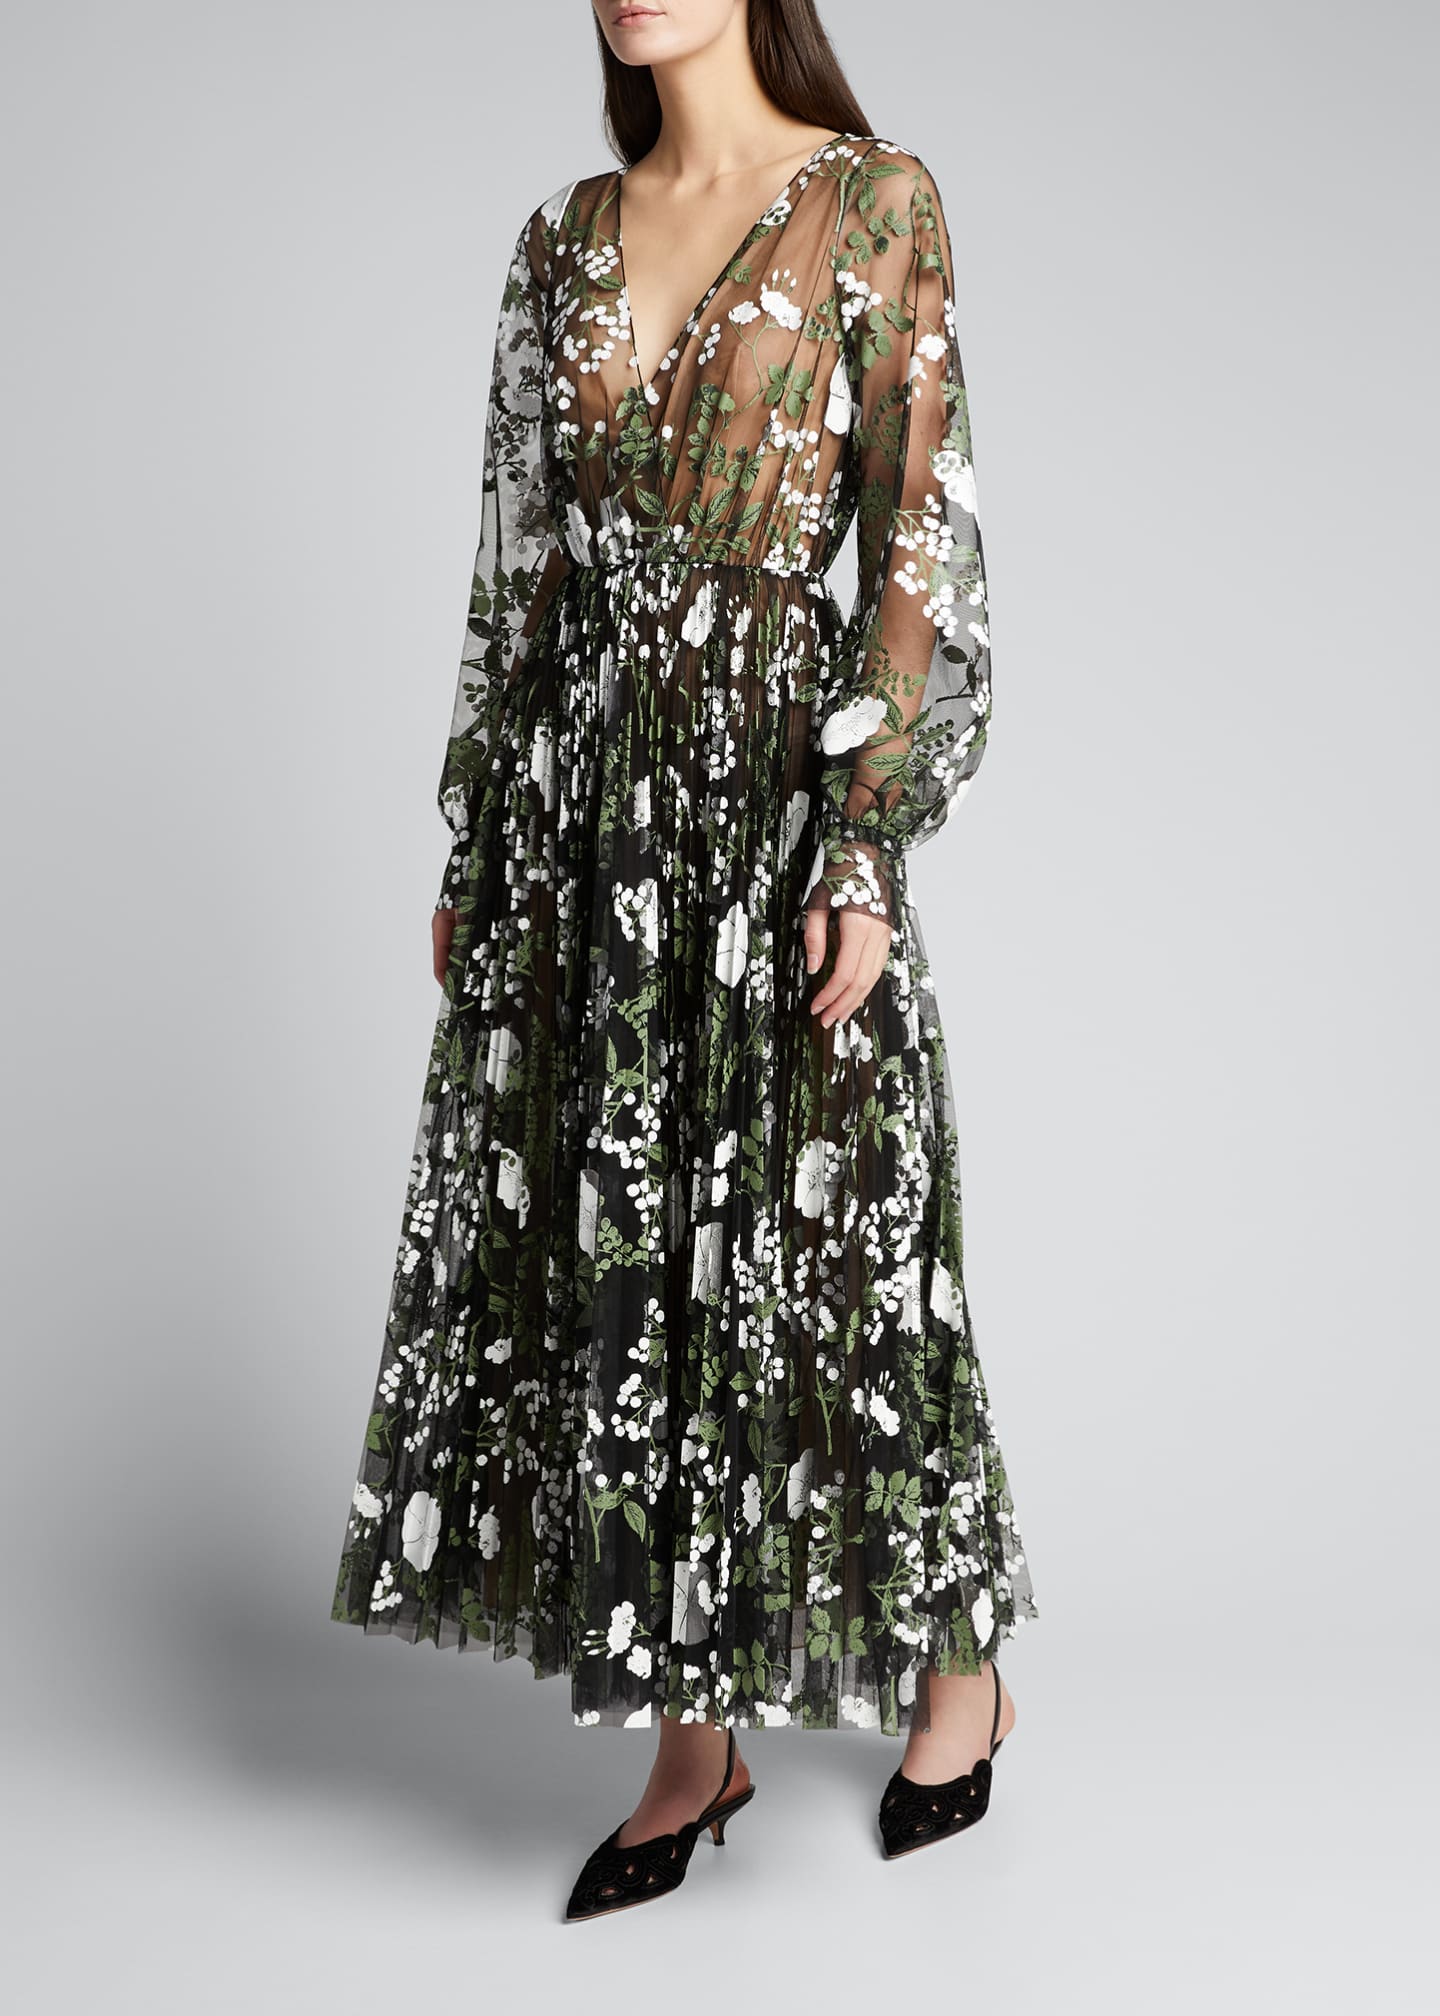 Oscar de la Renta Floral Embroidered Long-Sleeve Tea-Length Dress ...